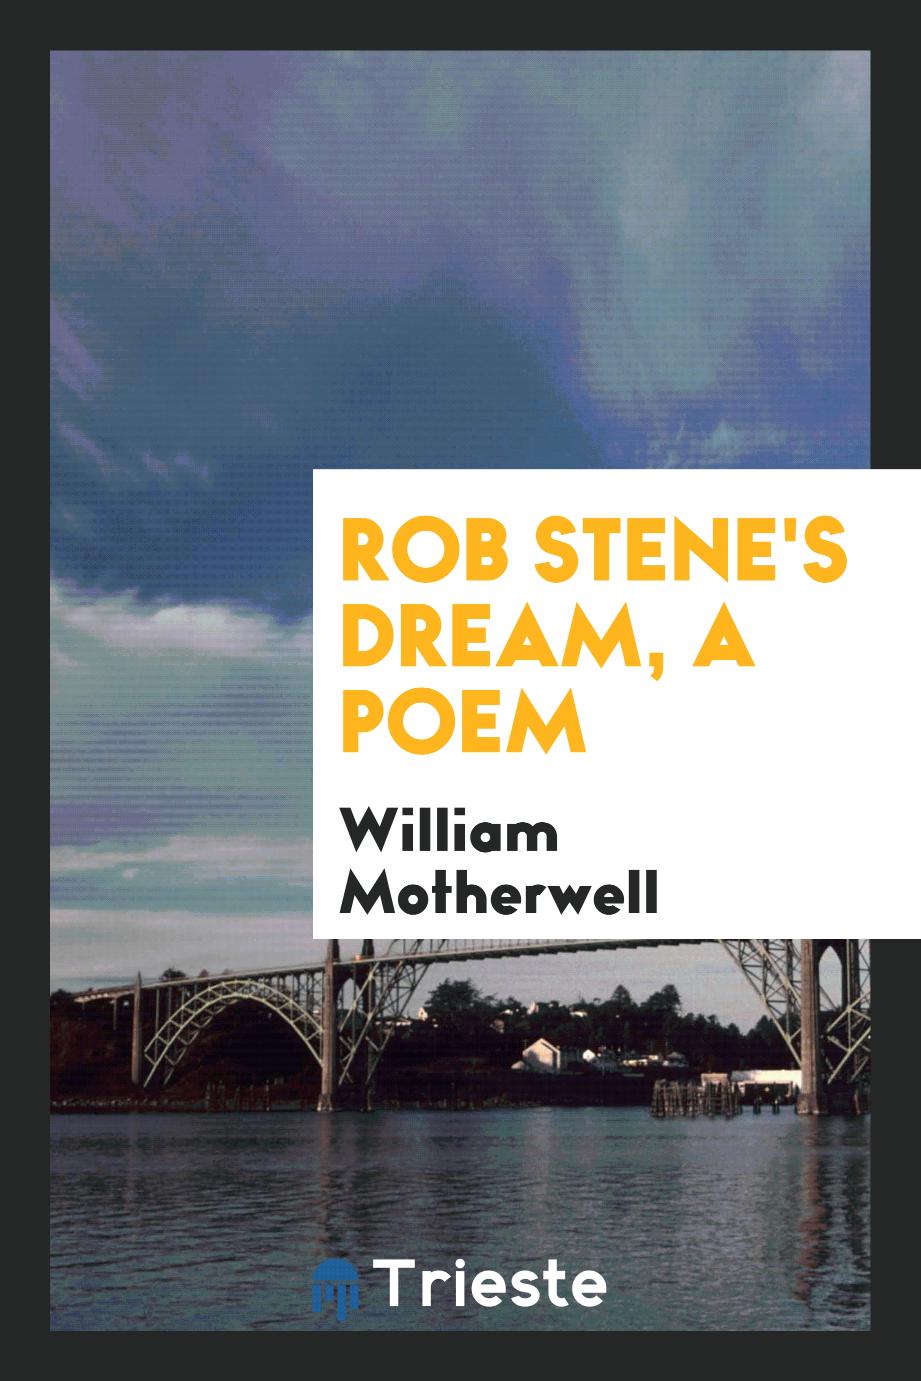 Rob Stene's dream, a poem